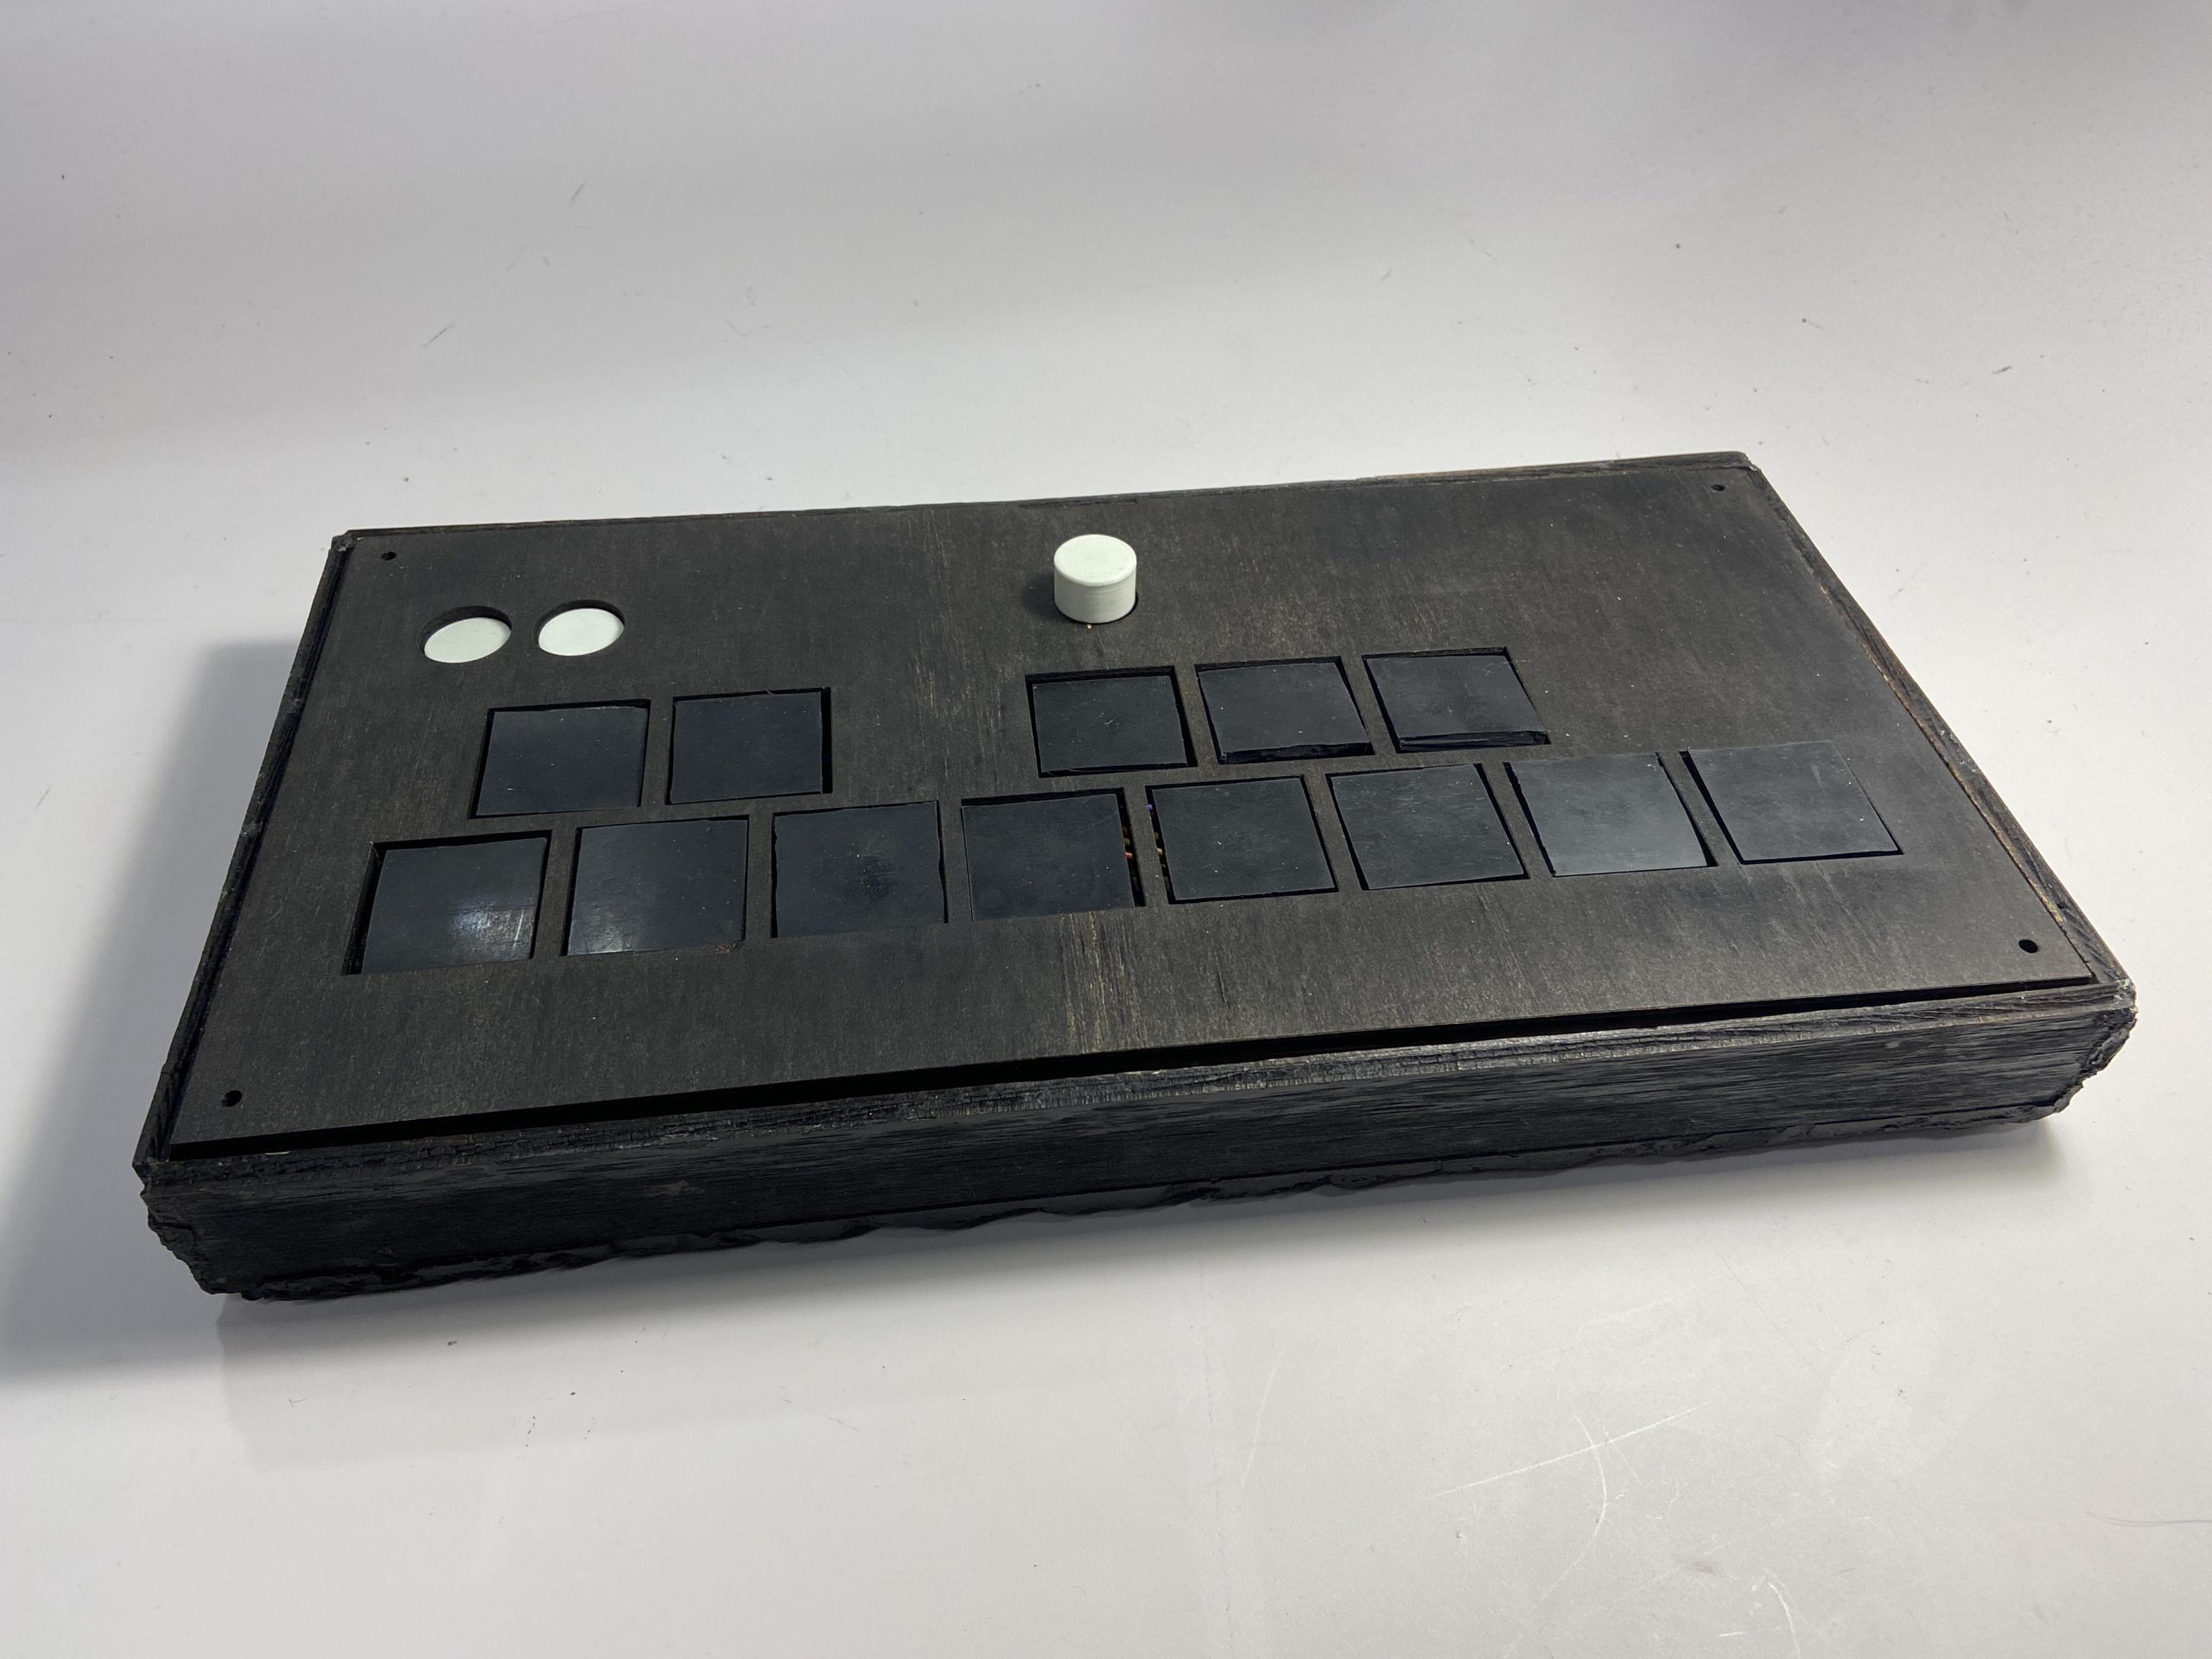 Making music with a Nano 33 IoT-based MIDI keyboard